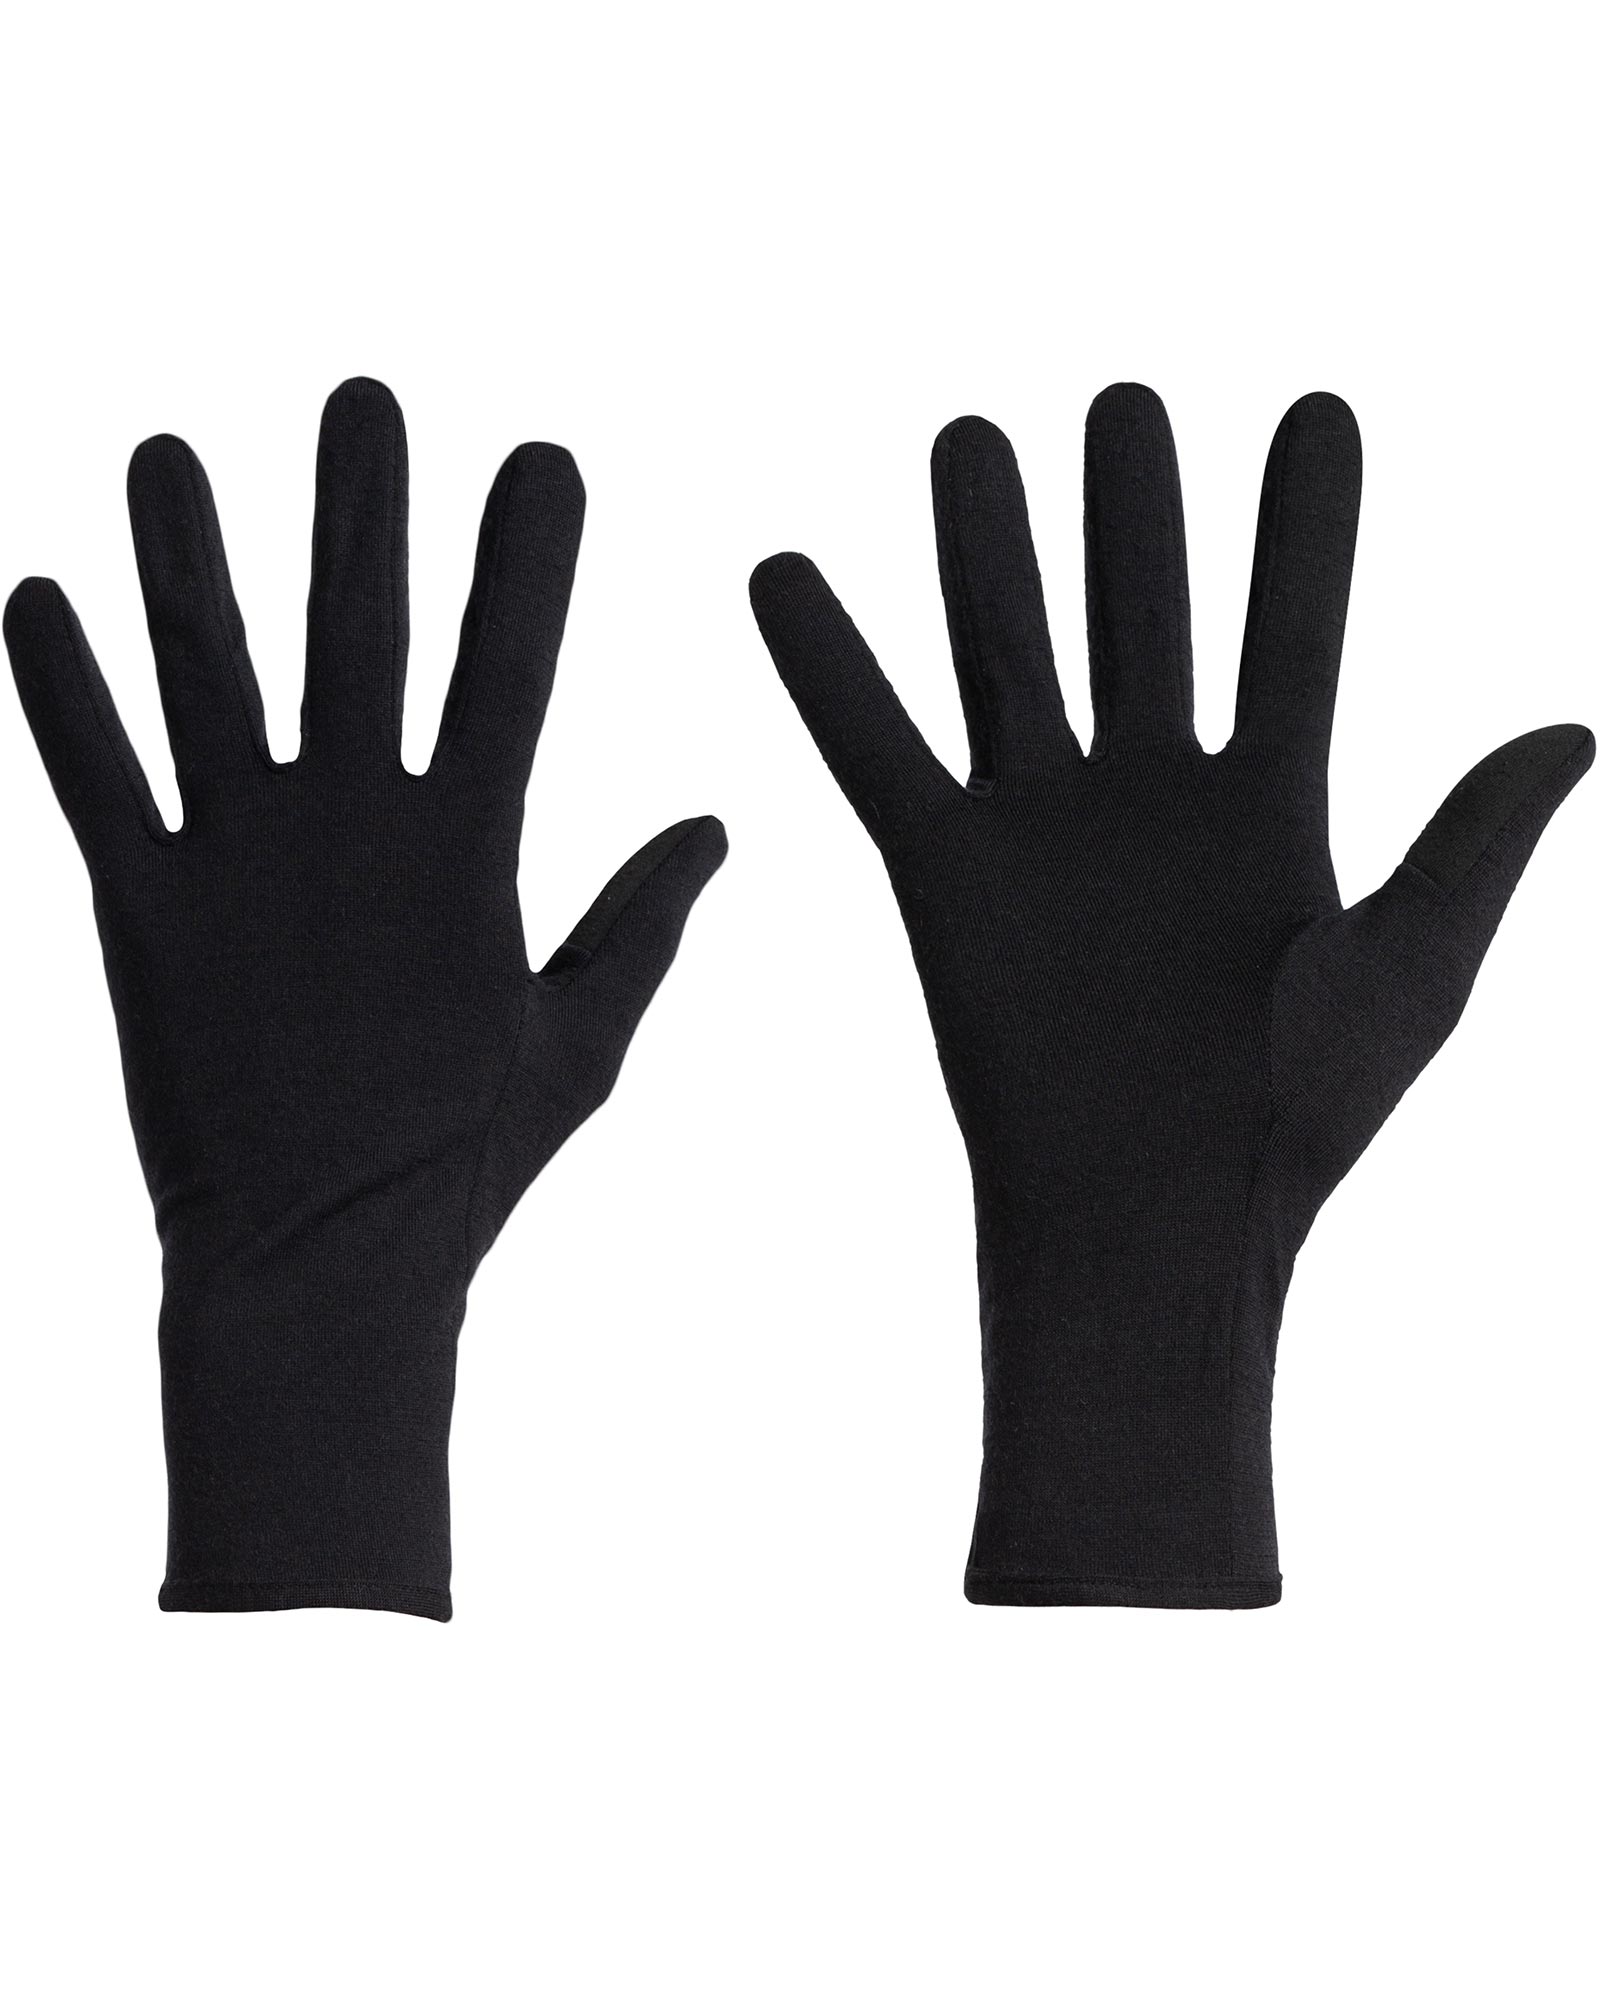 icebreaker Merino 260 Tech Glove Liners - black L